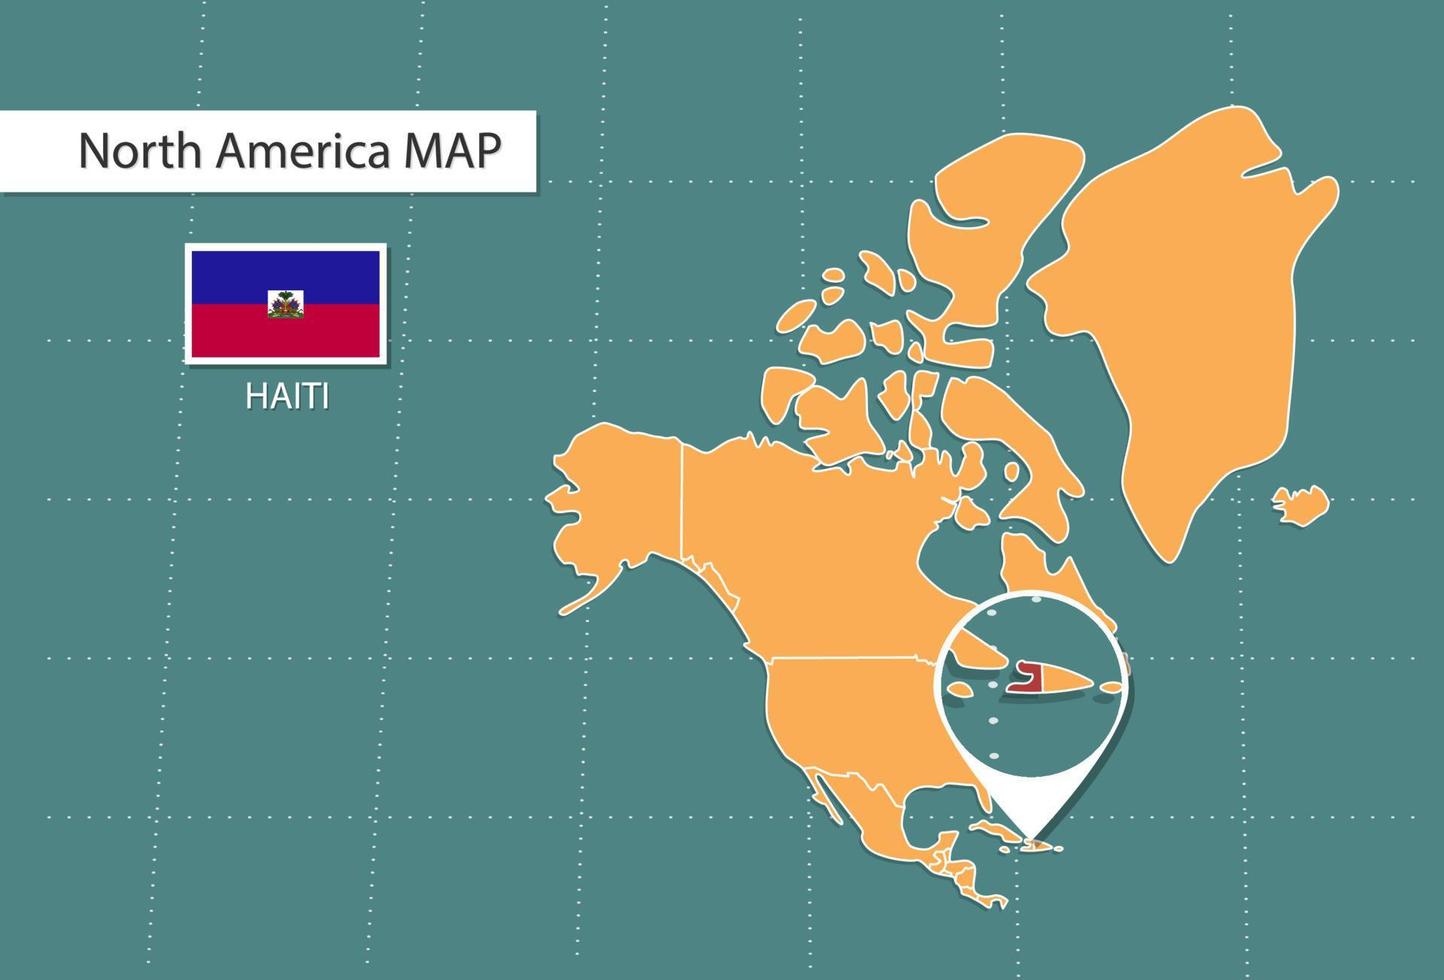 haiti Karta i Amerika zoom version, ikoner som visar haiti plats och flaggor. vektor